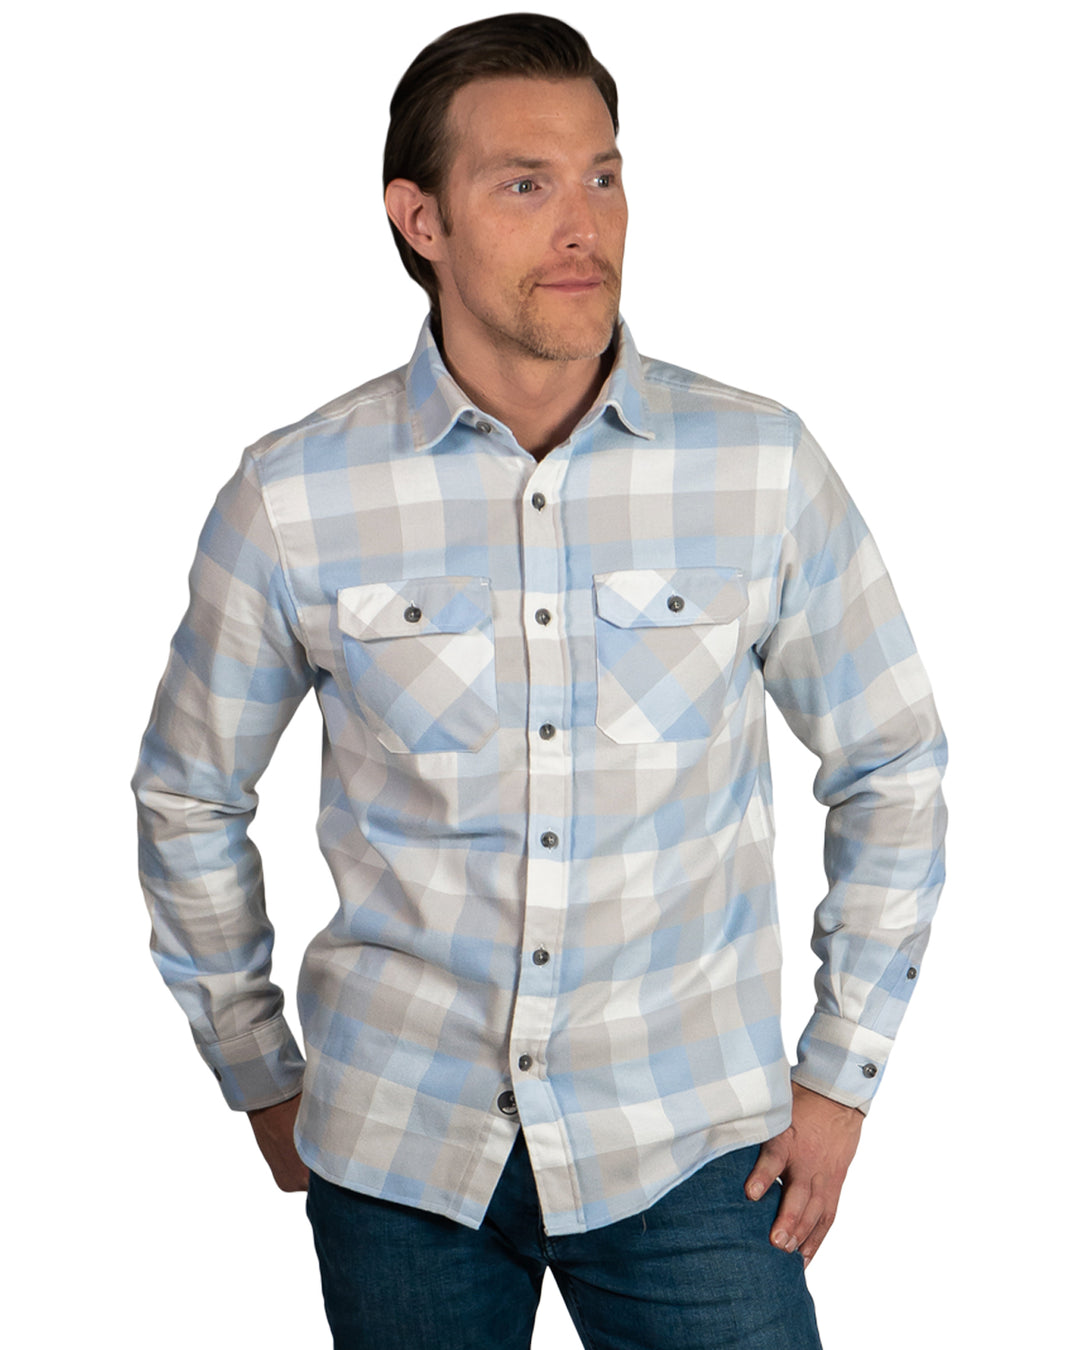 MuskOx Three Seasons Flannel in Vintage Sky Blue, 100% cotton lightweight flannel shirt for men